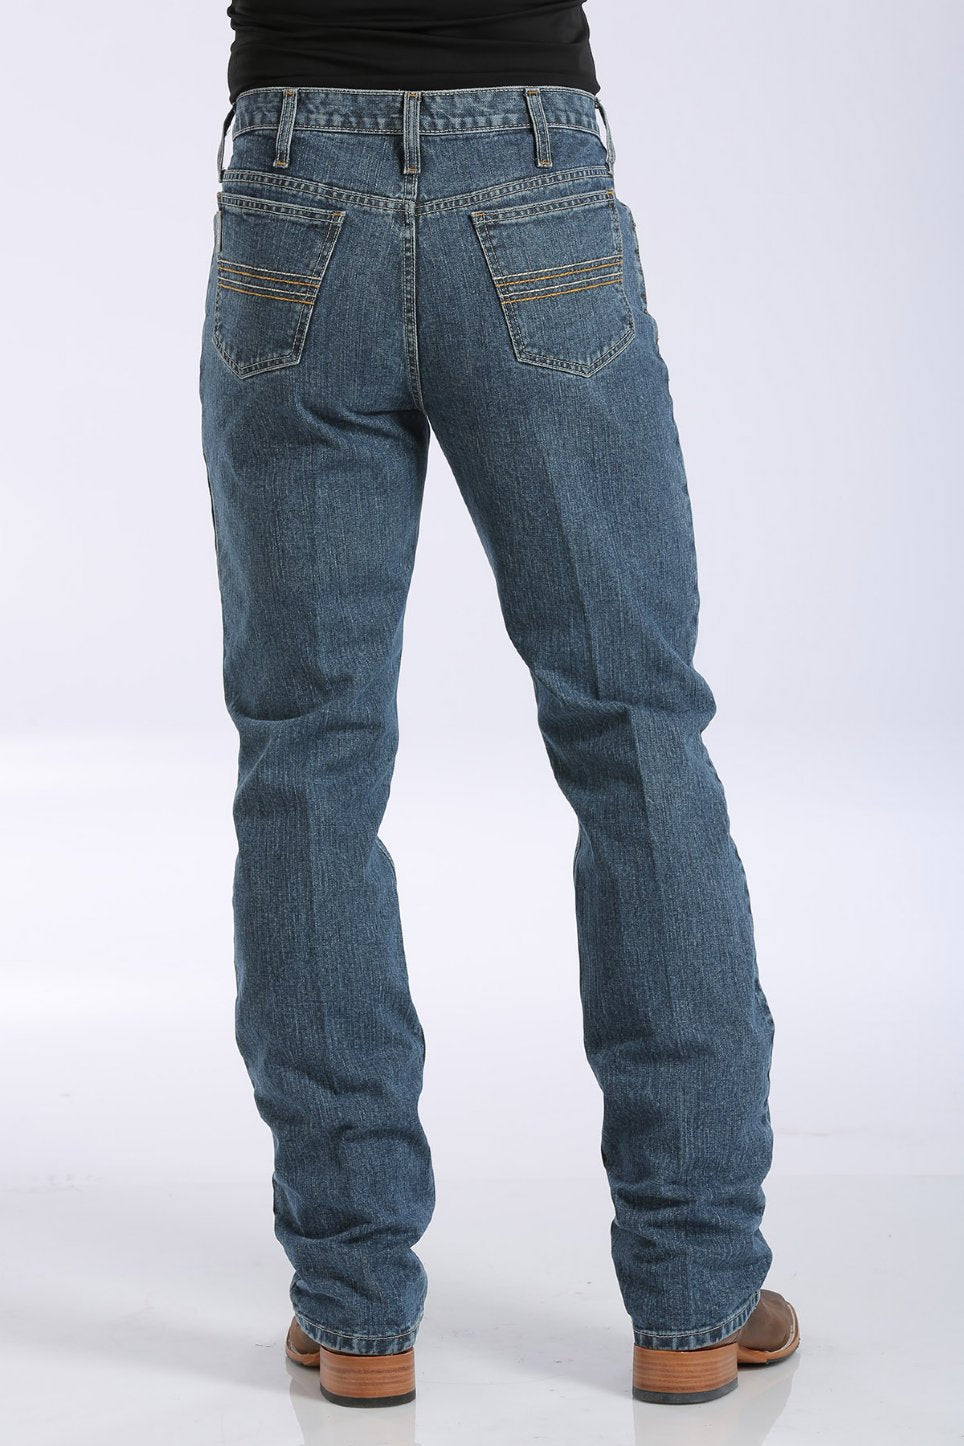 Cinch Men's Slim Fit Silver Label Jeans, Medium Stone Wash Jeans